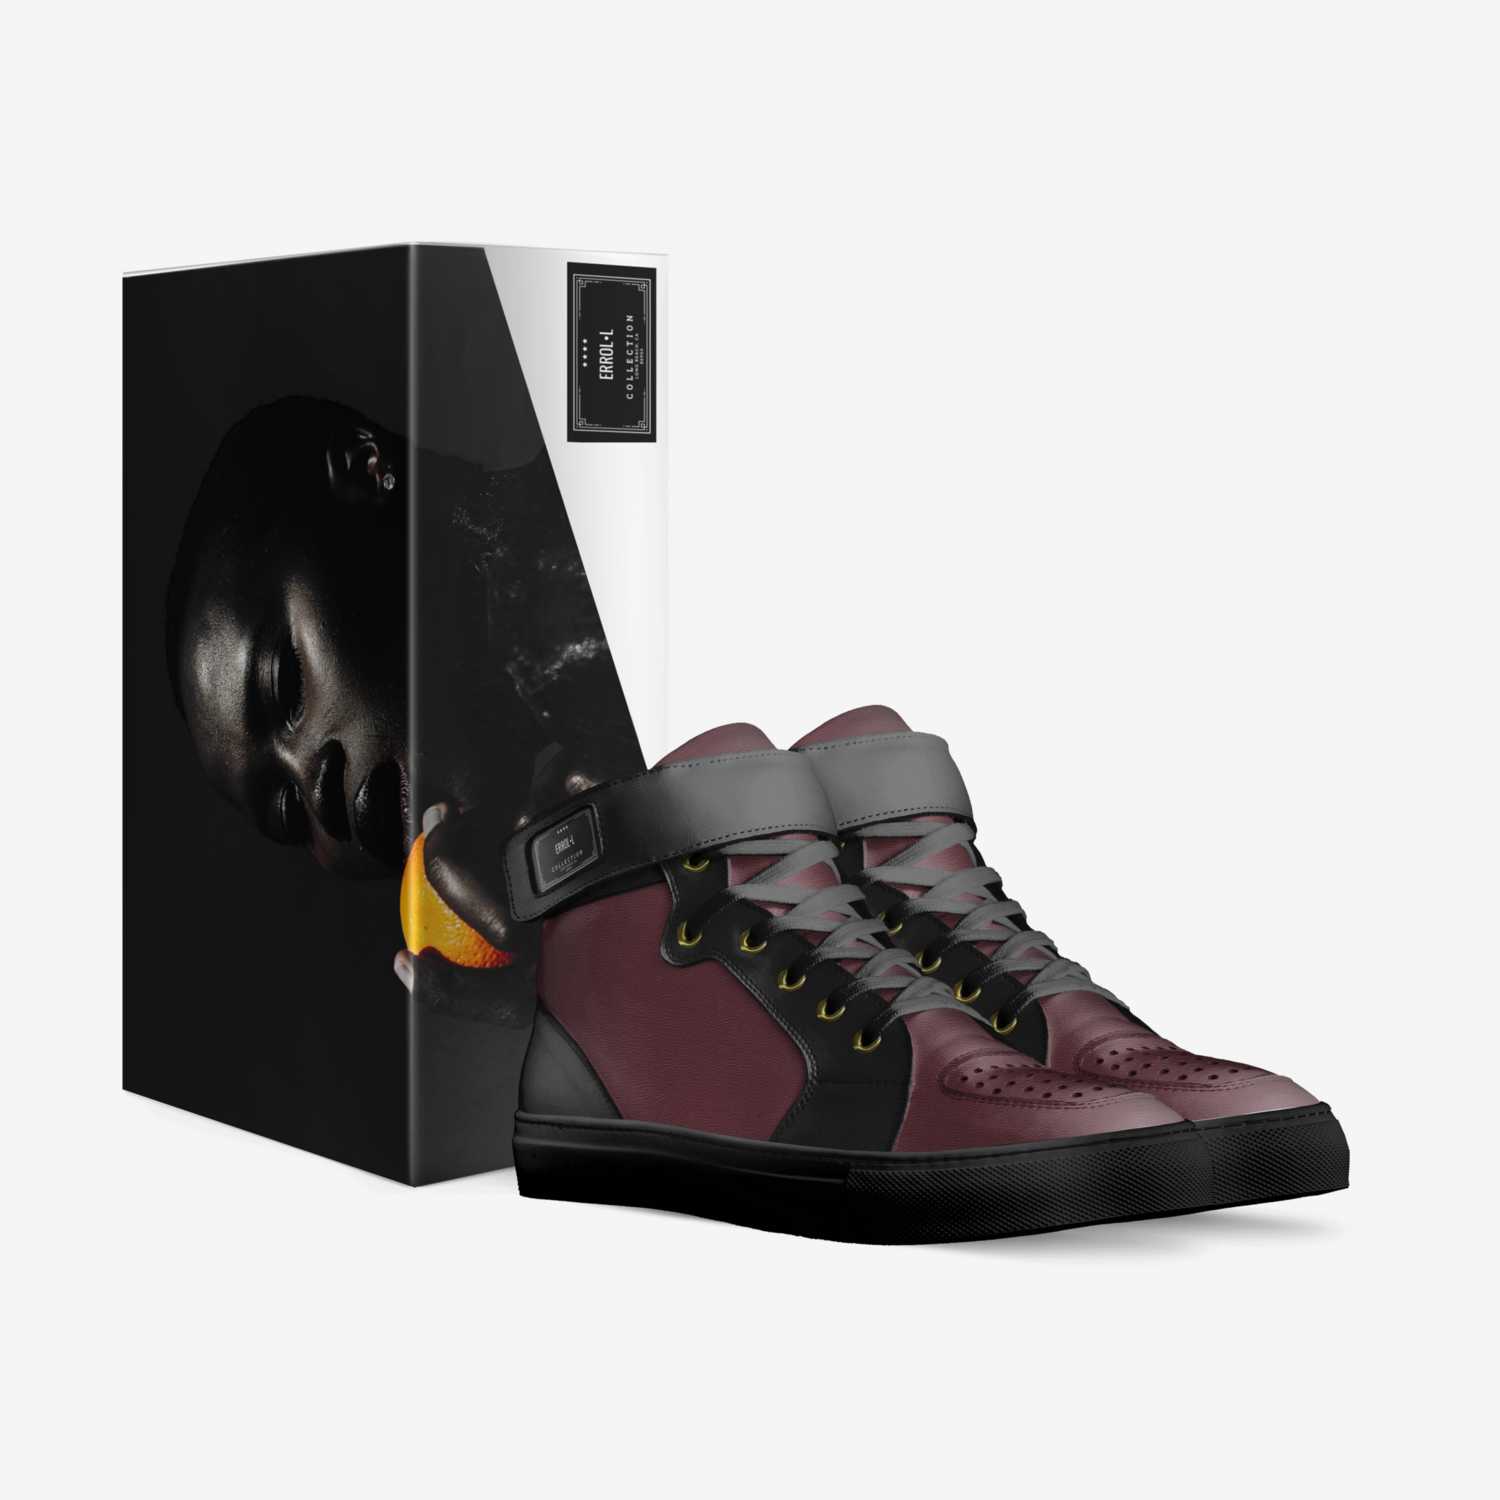 ERROL•L custom made in Italy shoes by Carolina Luke | Box view